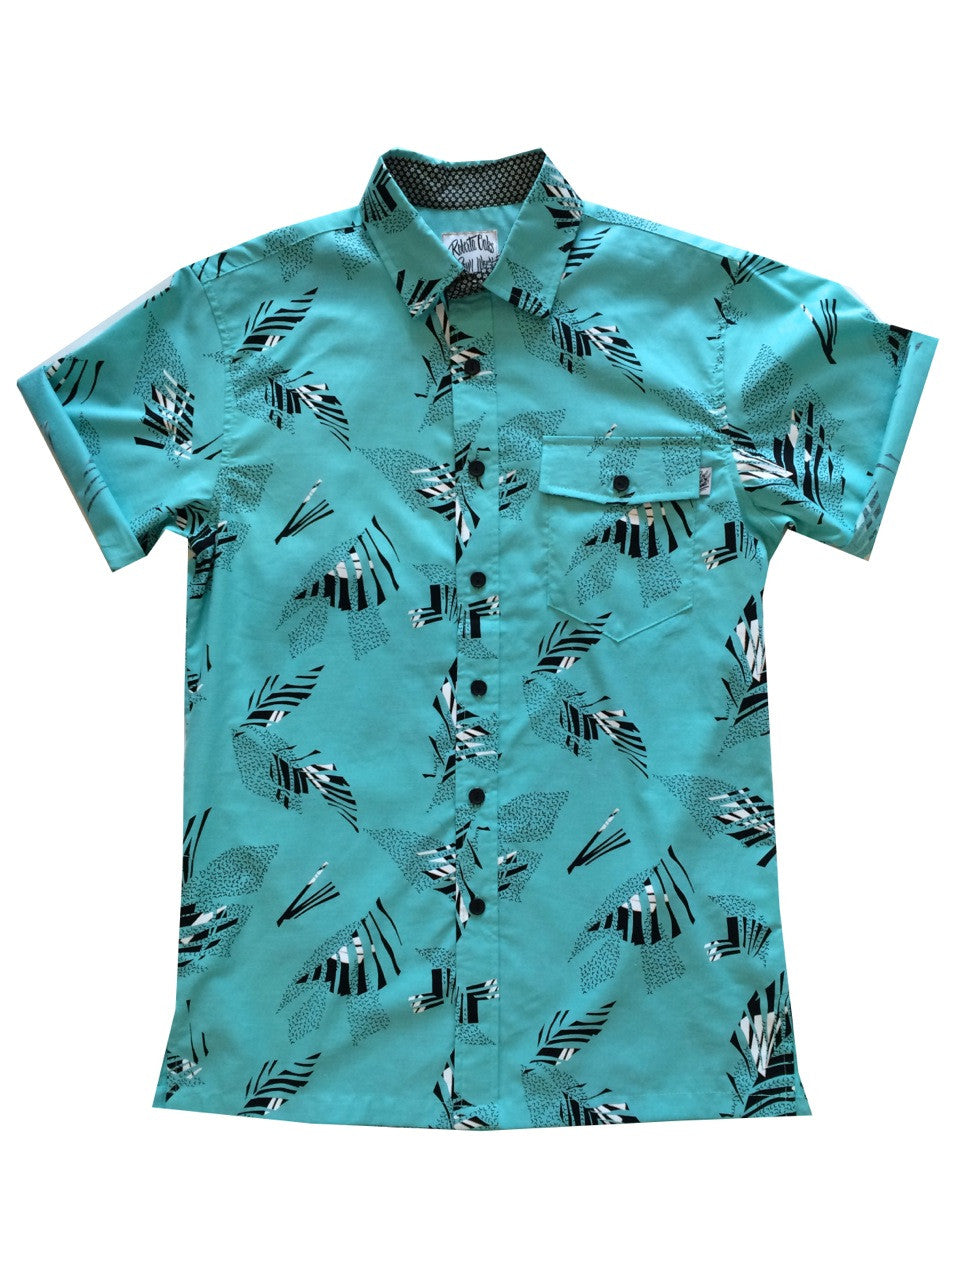 Pow Wow Hawaii 2015 Kamani Shirt - SOLD OUT